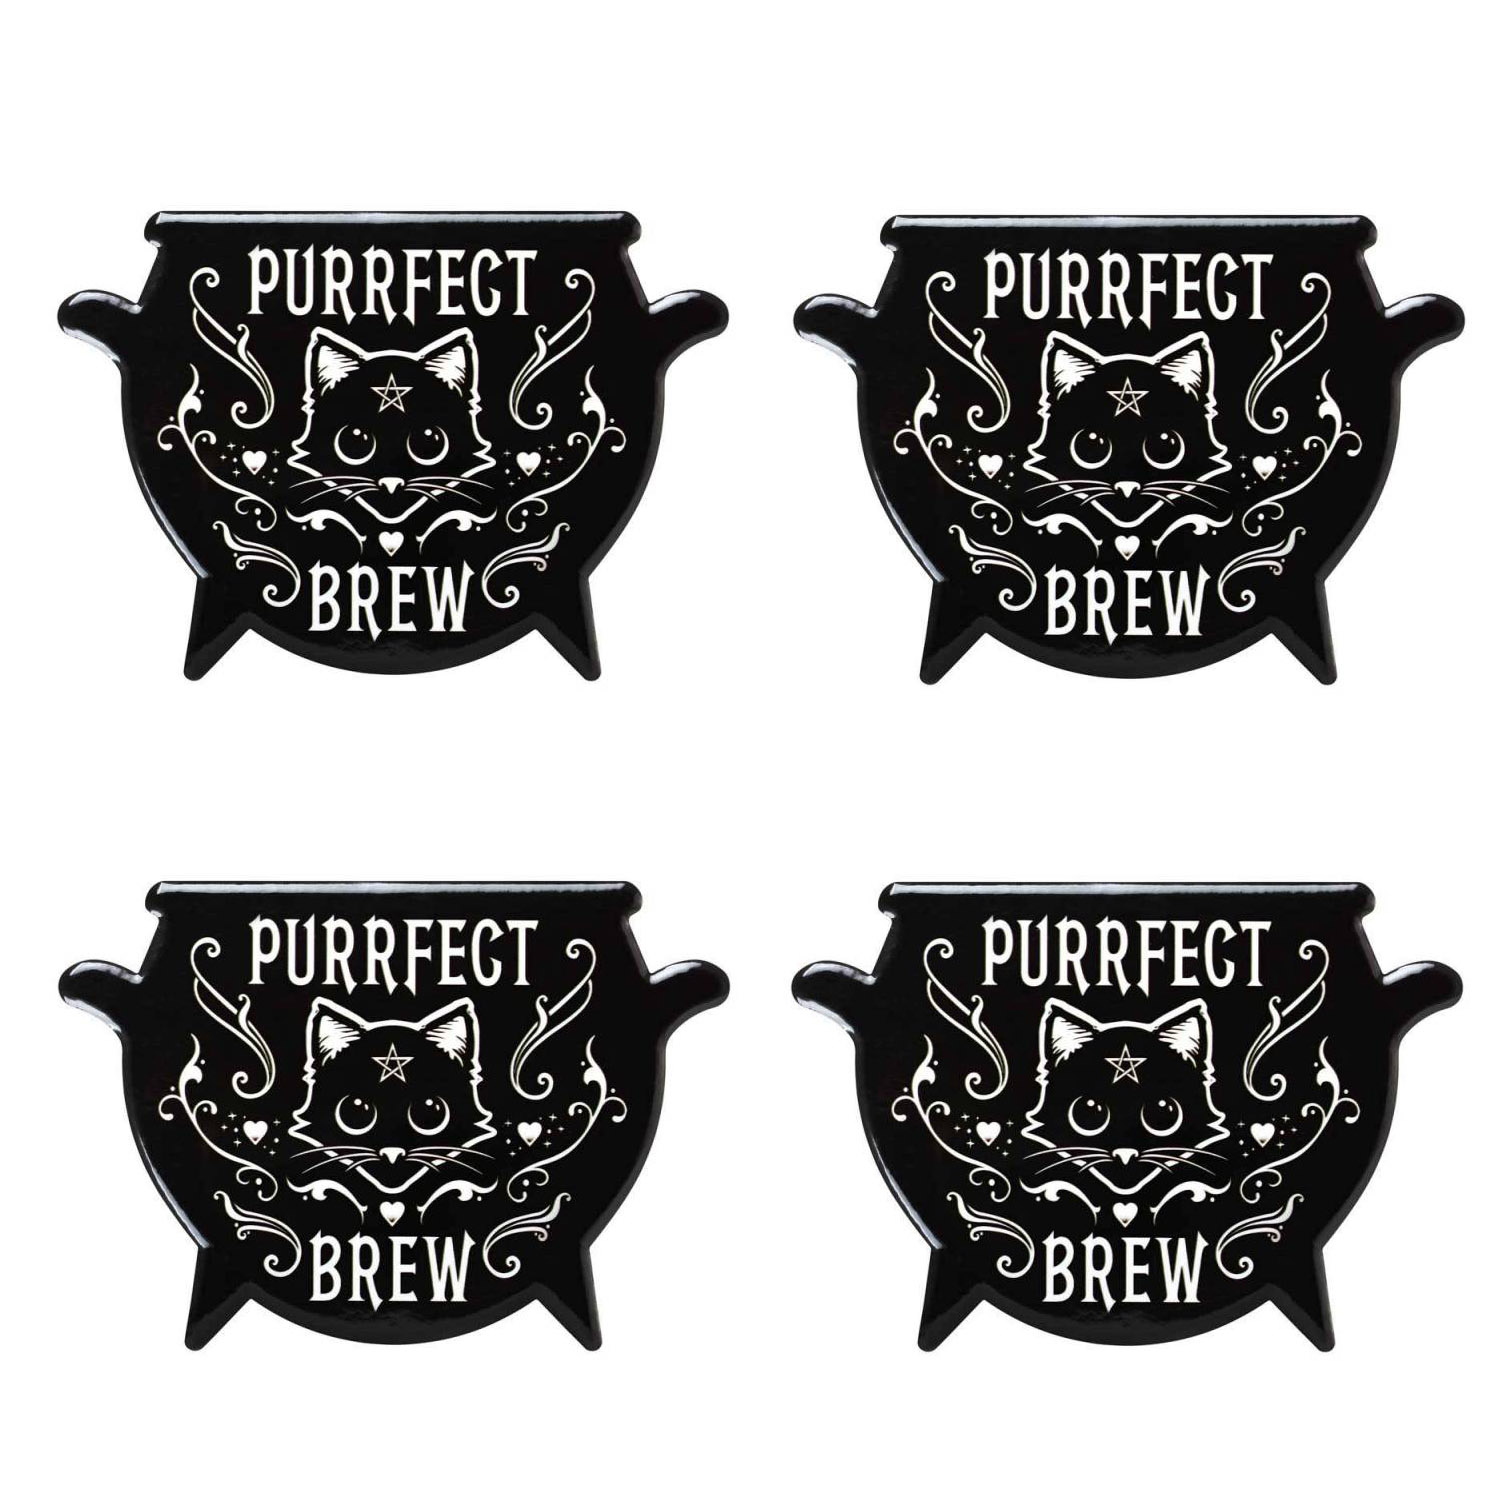 15165 Purrfect Brew Cauldron Coaster Set of 4